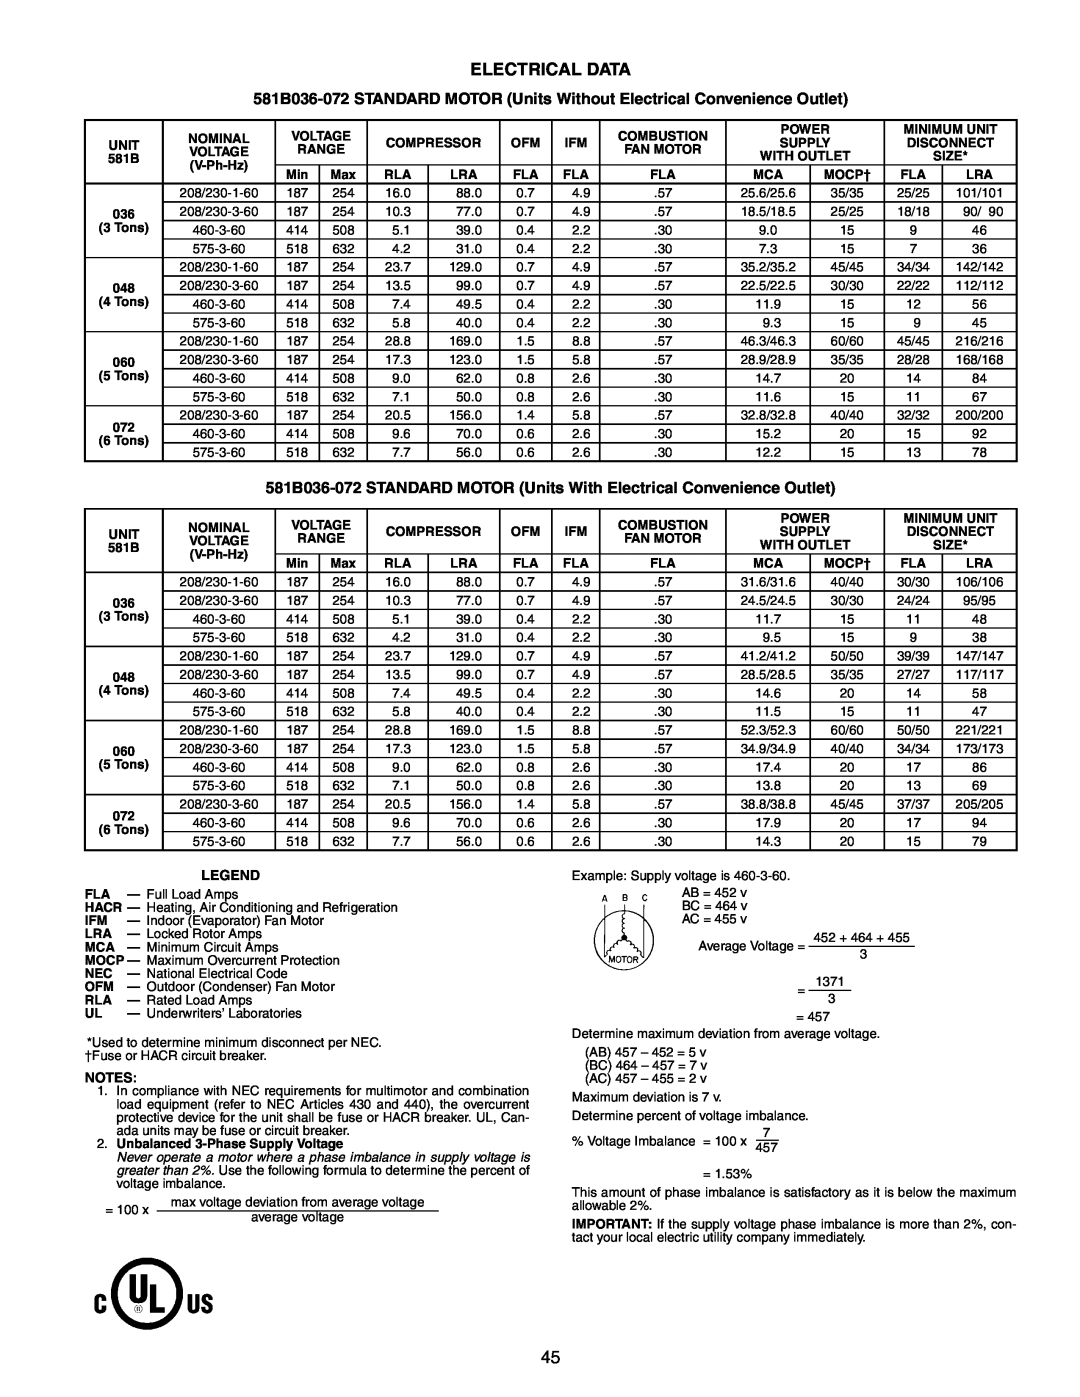 Bryant 581B manual Electrical Data 